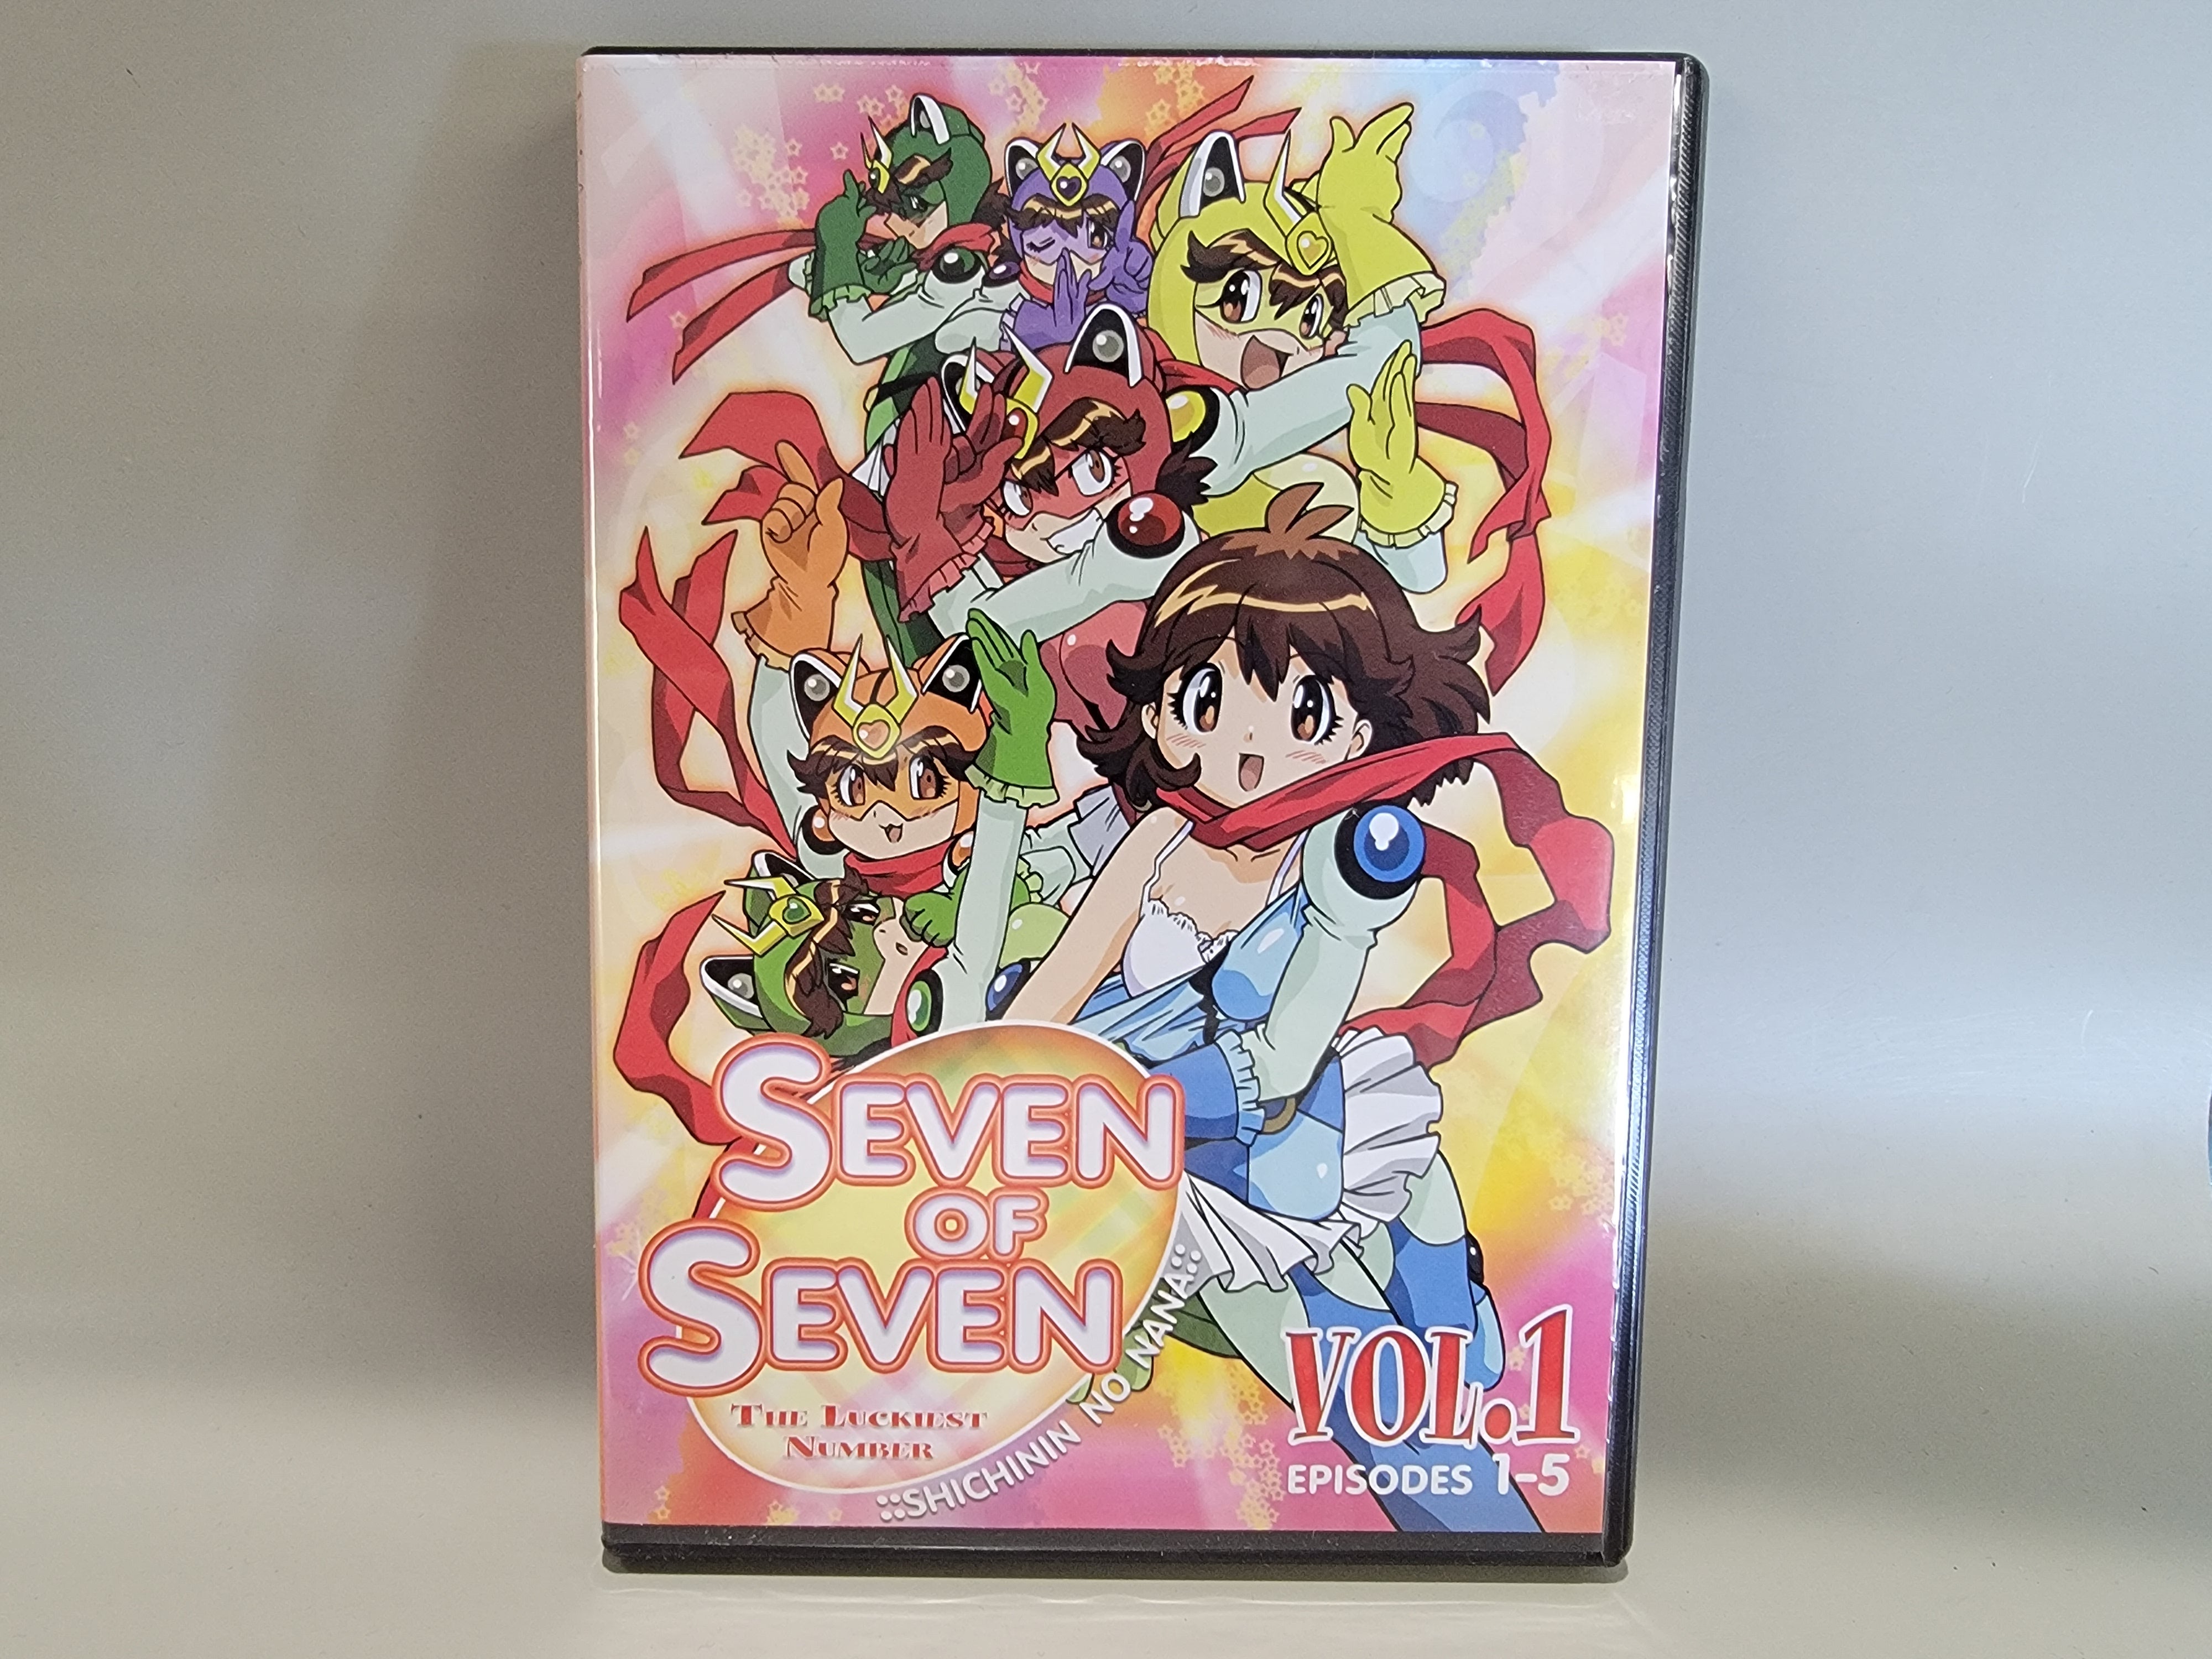 SEVEN OF SEVEN VOLUME 1 DVD [USED]